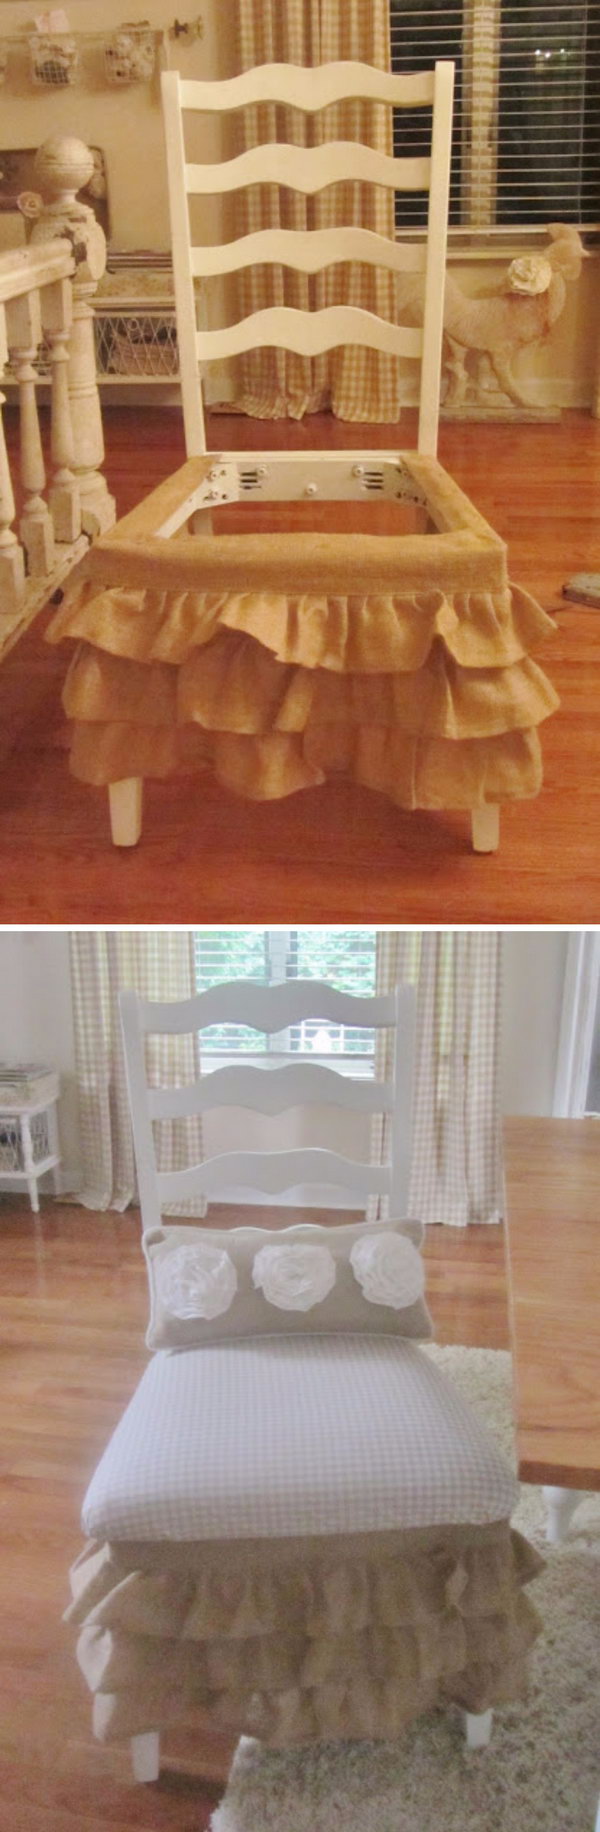 Ruffled burlap chair skirt made from ruffles. 